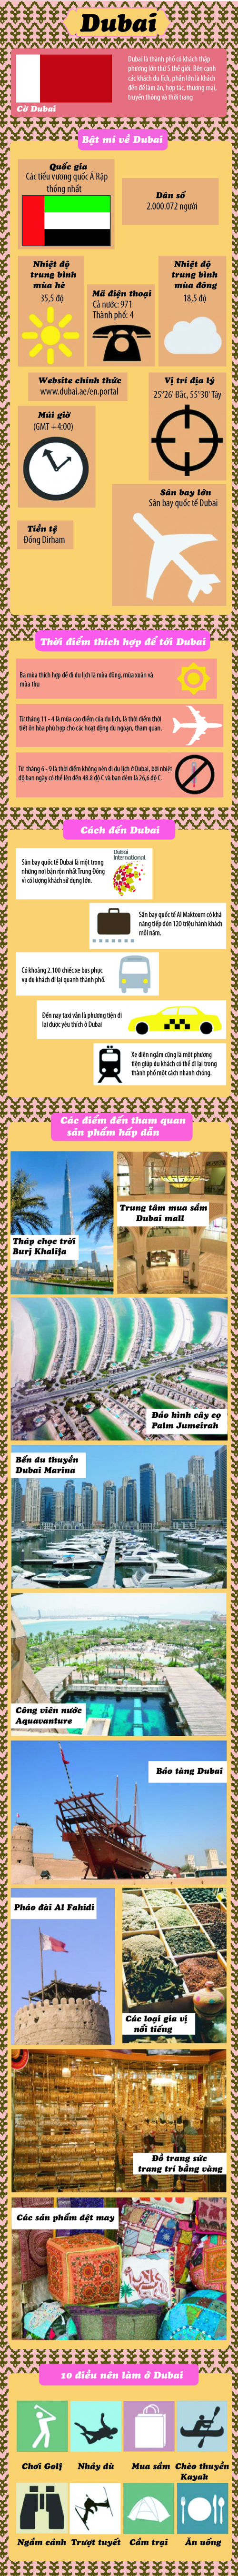 Dubai1-4336-1400221418.jpg